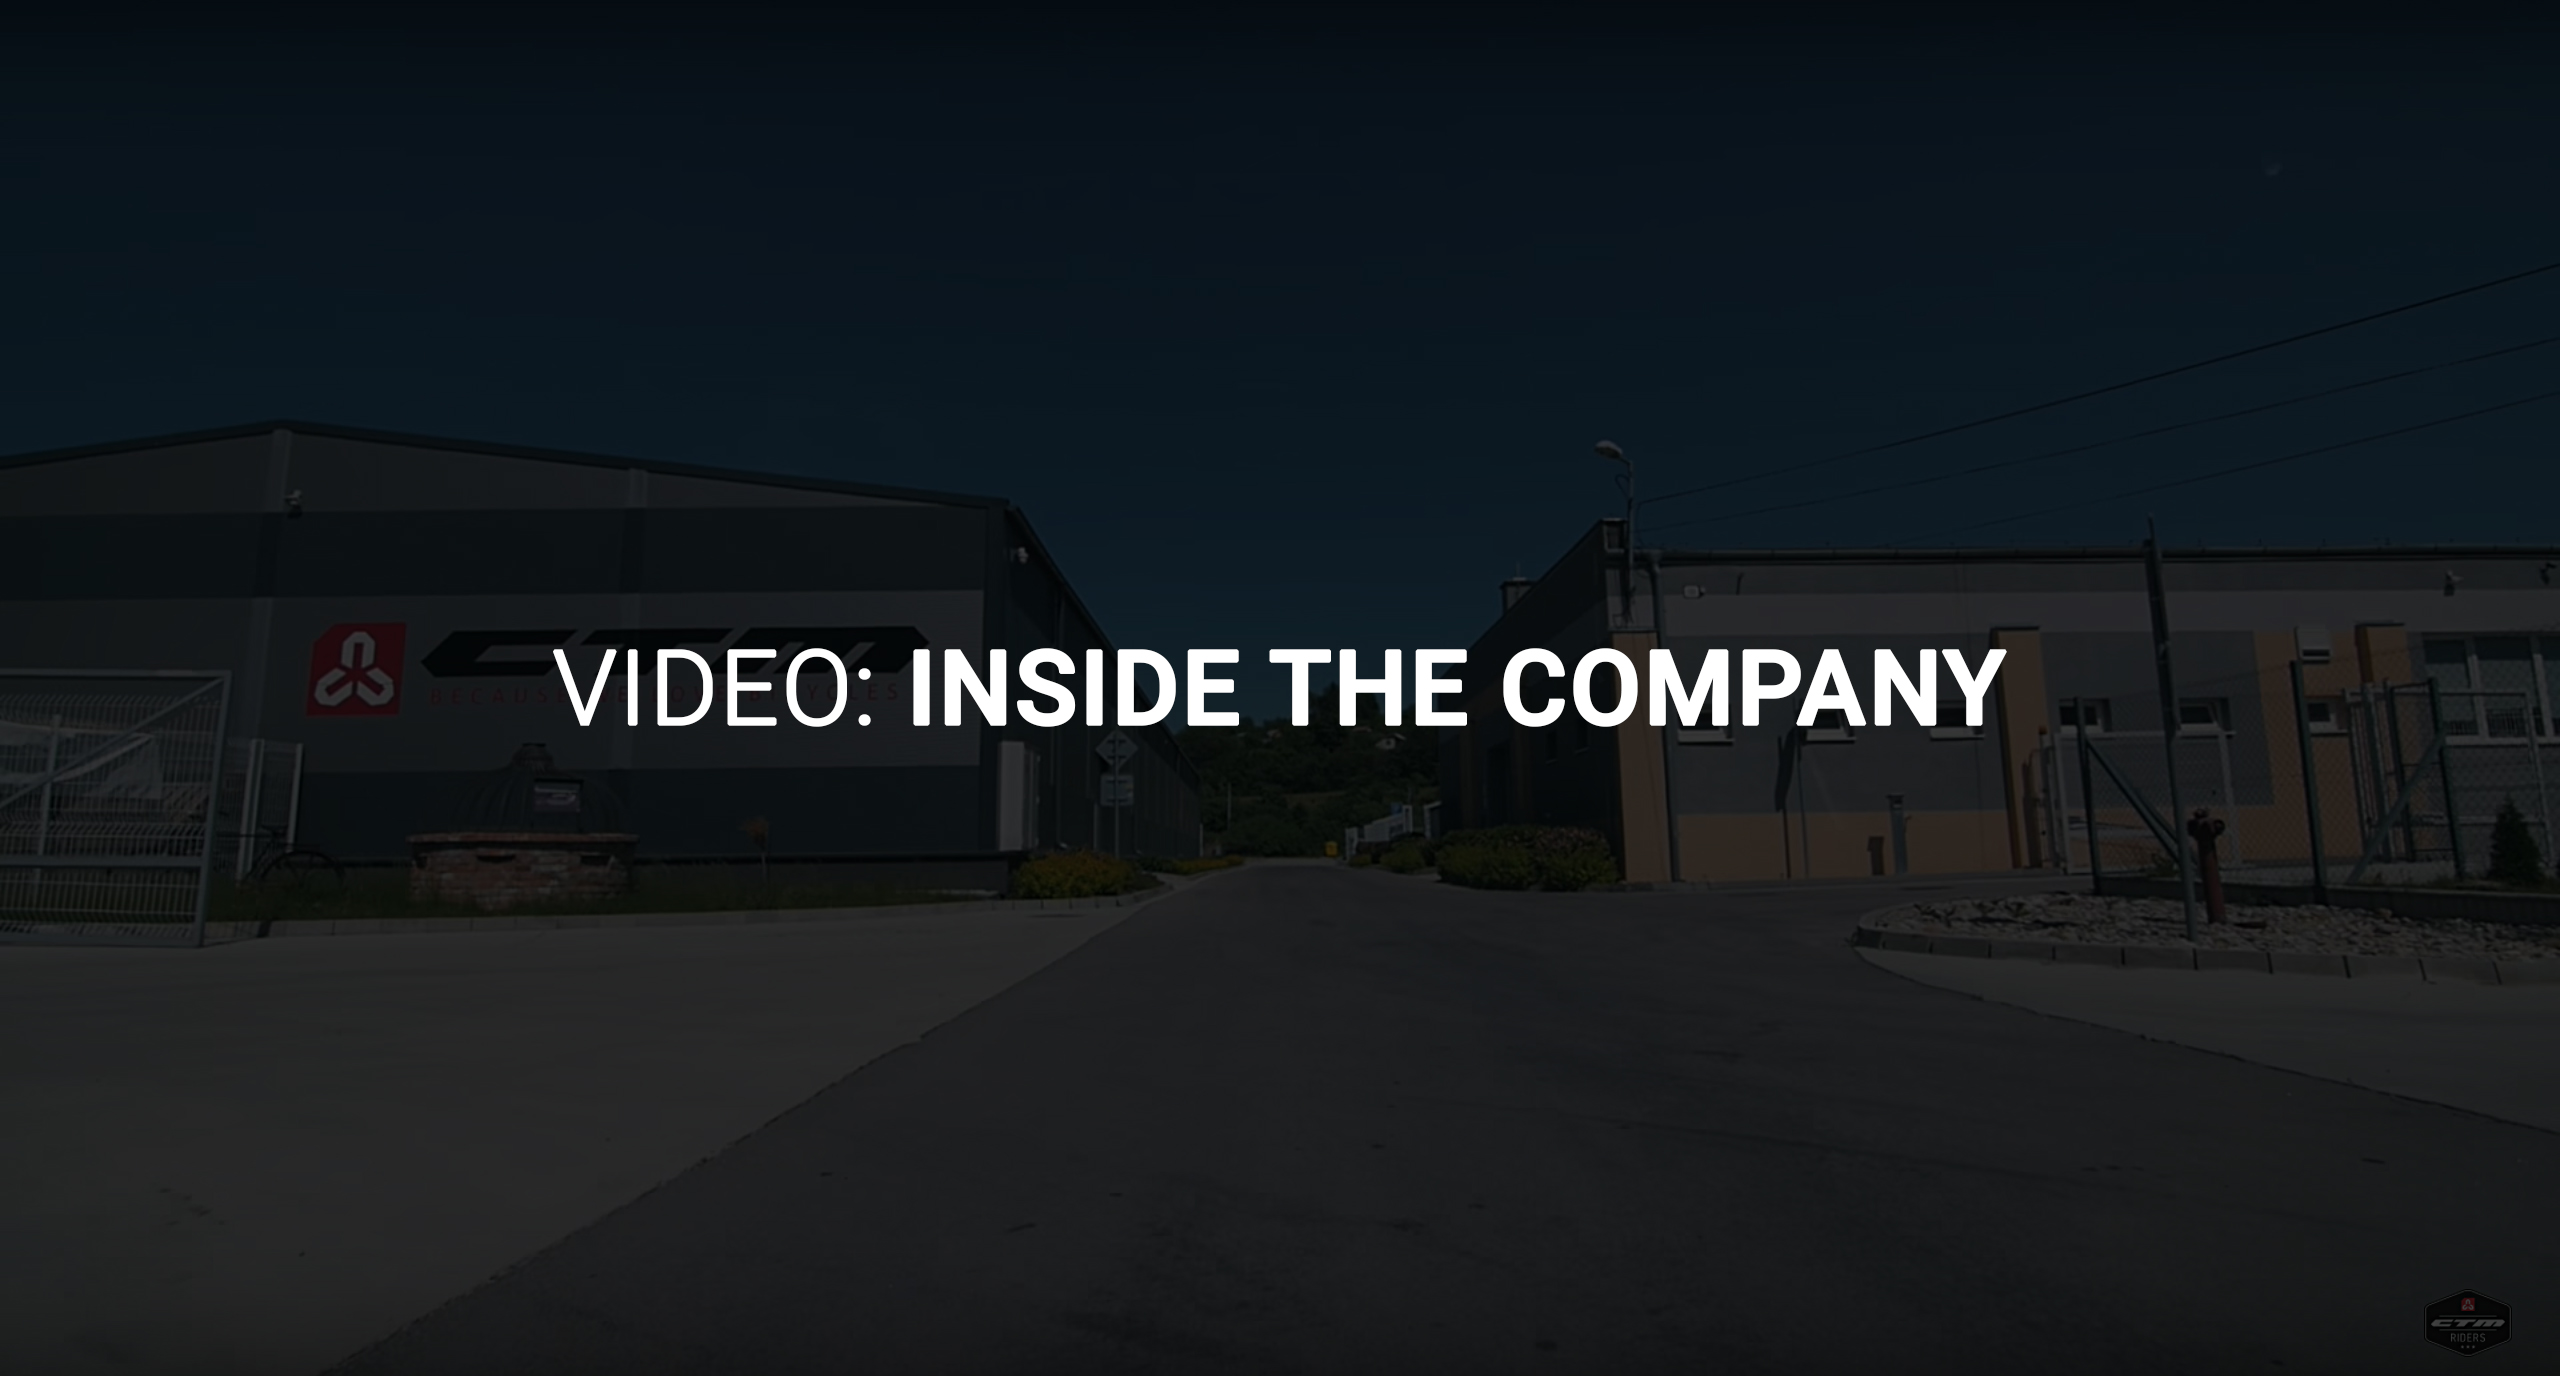 VIDEO: INSIDE THE COMPANY